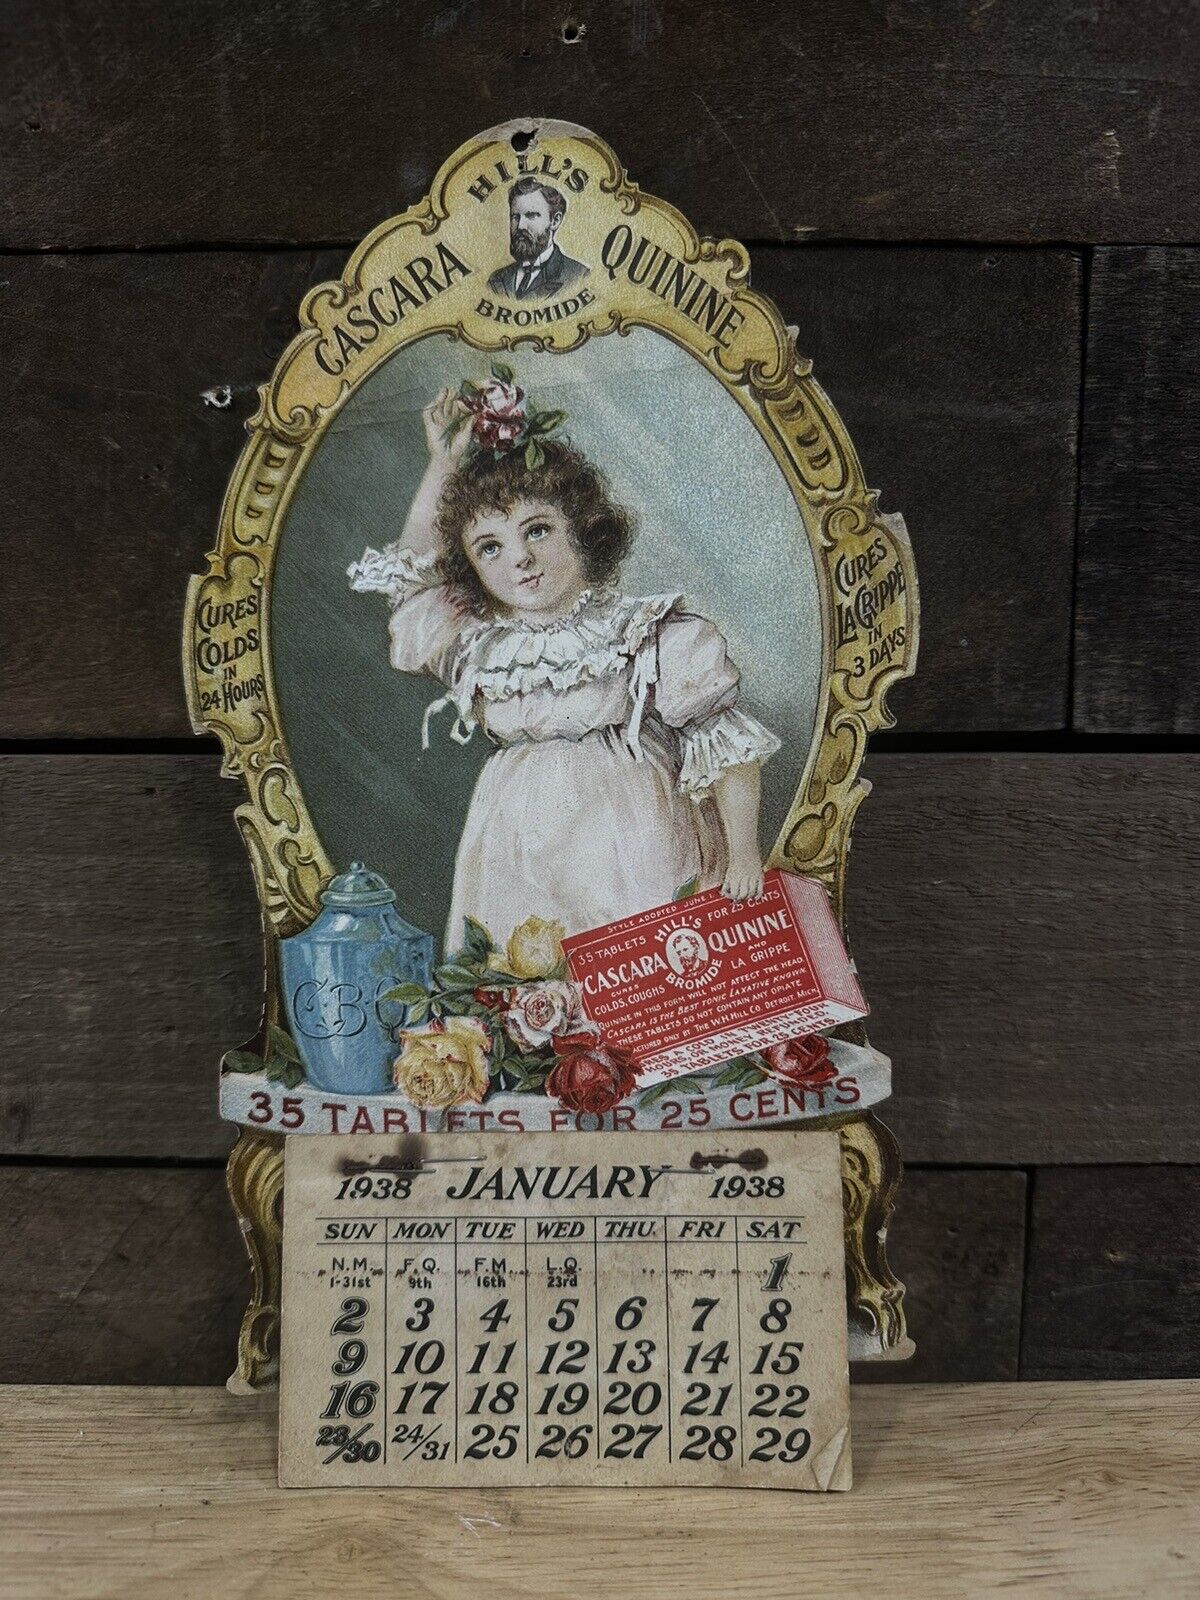 Vintage 1938 “Hill’s Bromide” Cascara Quinine Calendar Flower Girl Advertising 